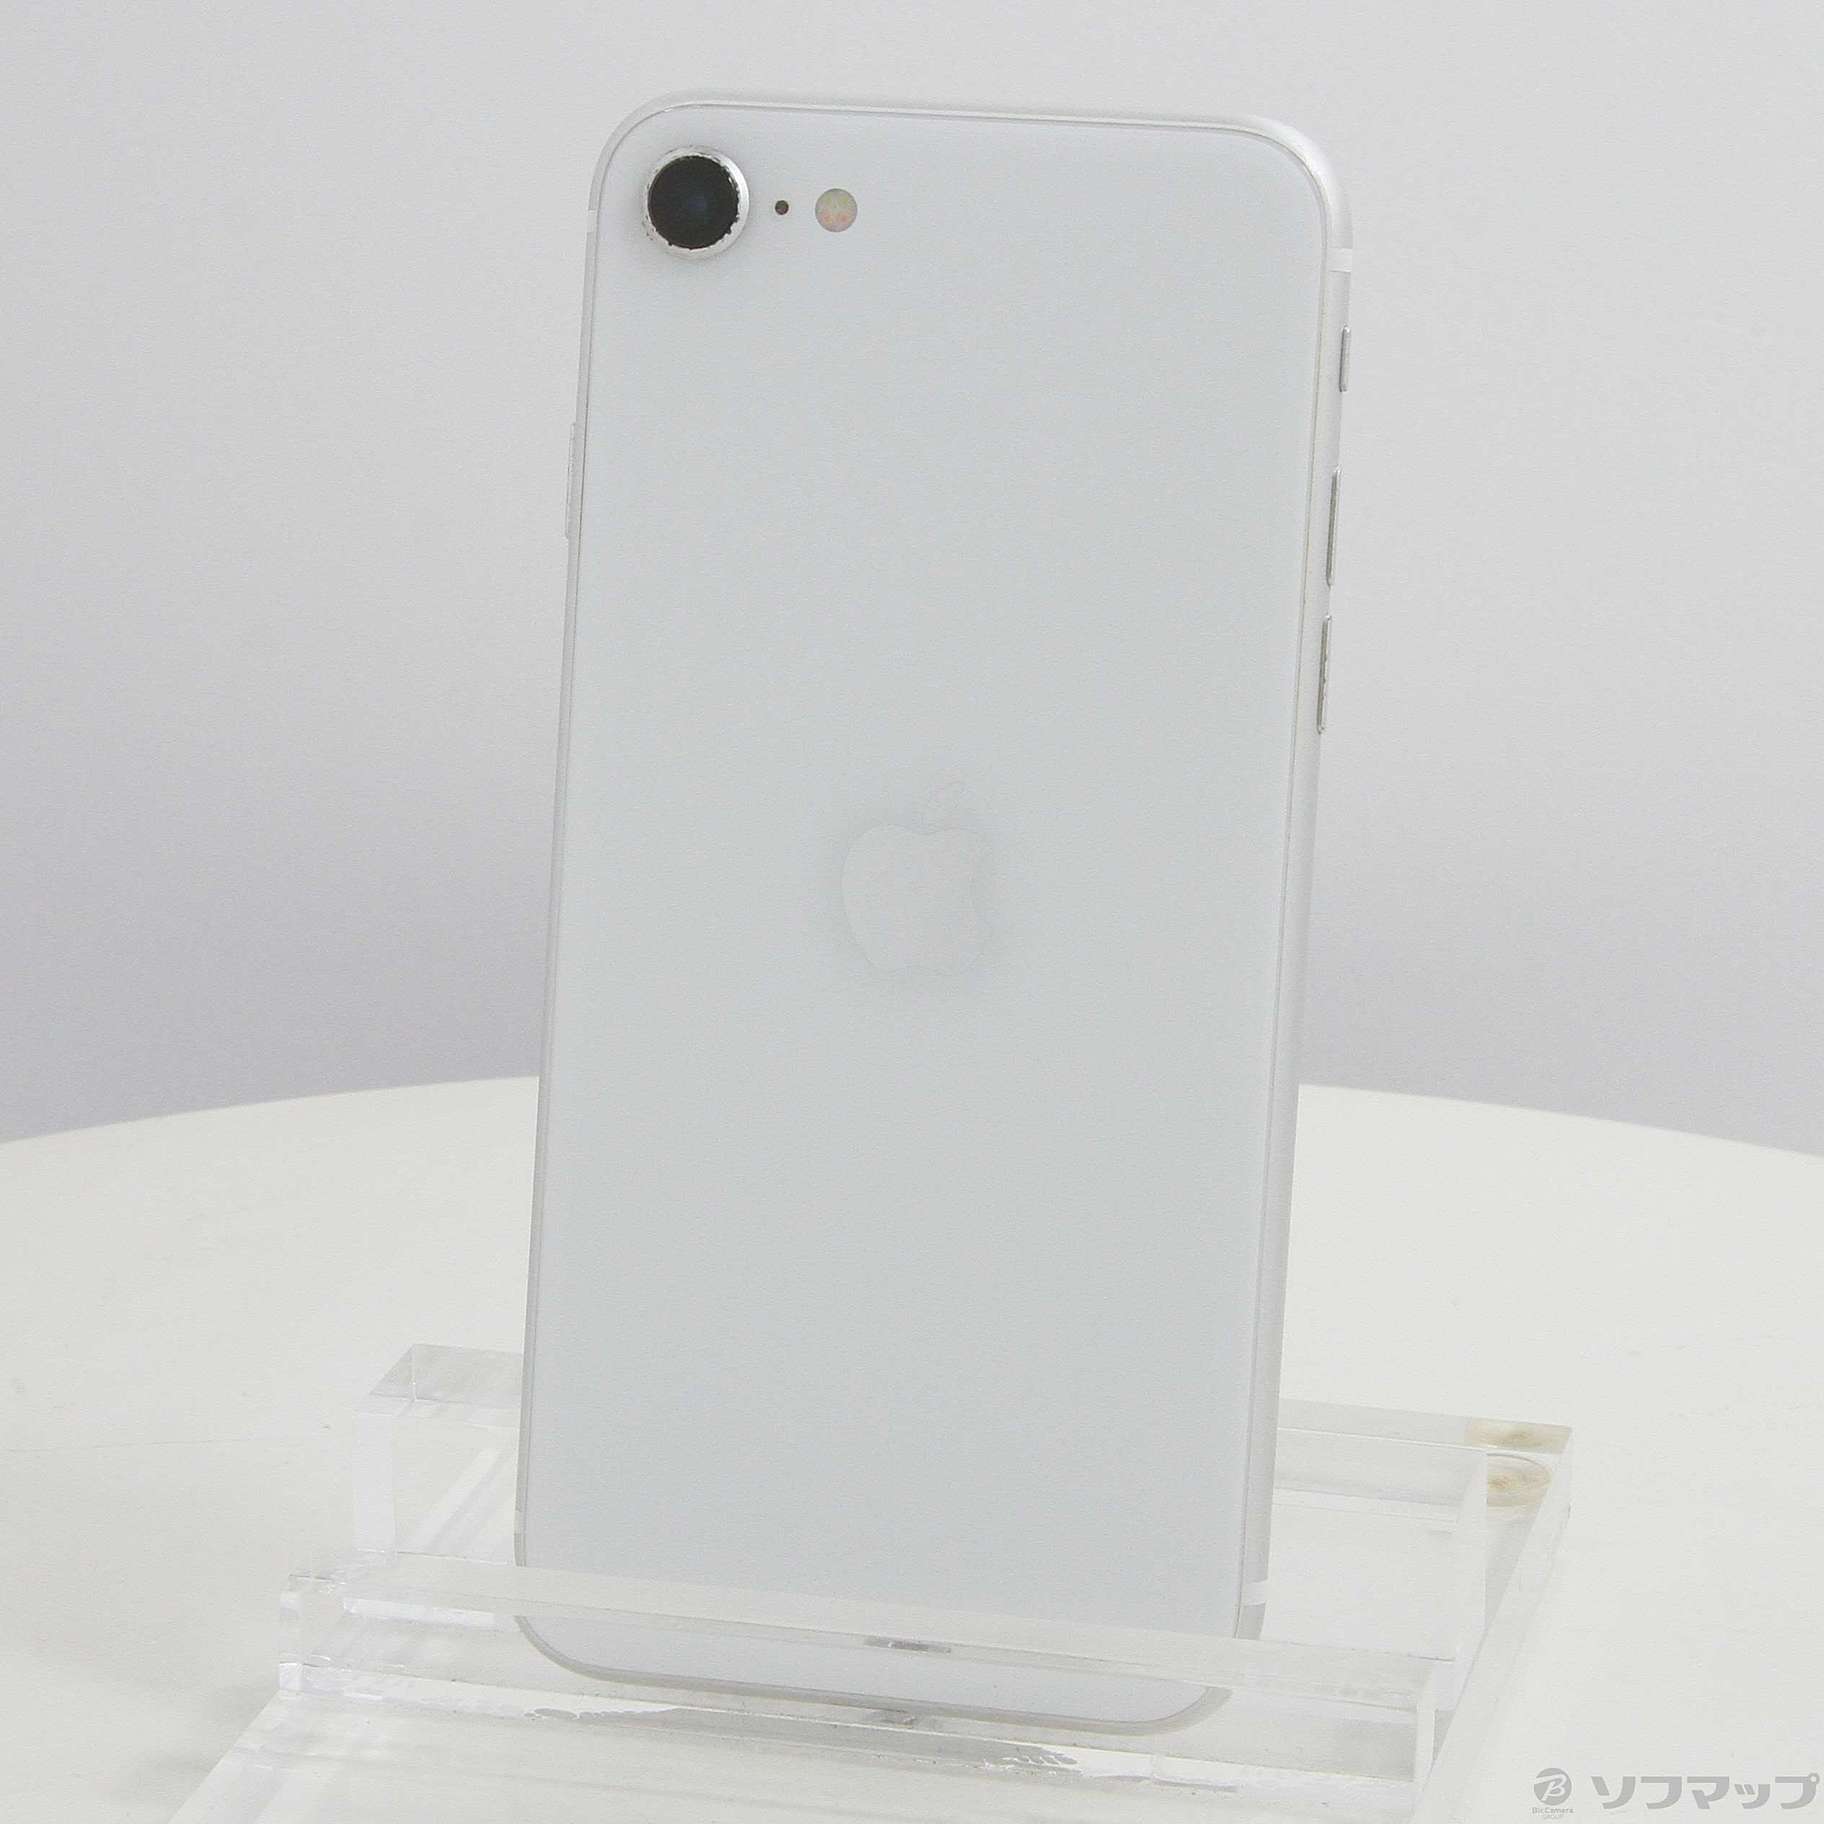 iPhone SE 第2世代 (SE2) ホワイト 64 GB Softbank - スマートフォン本体